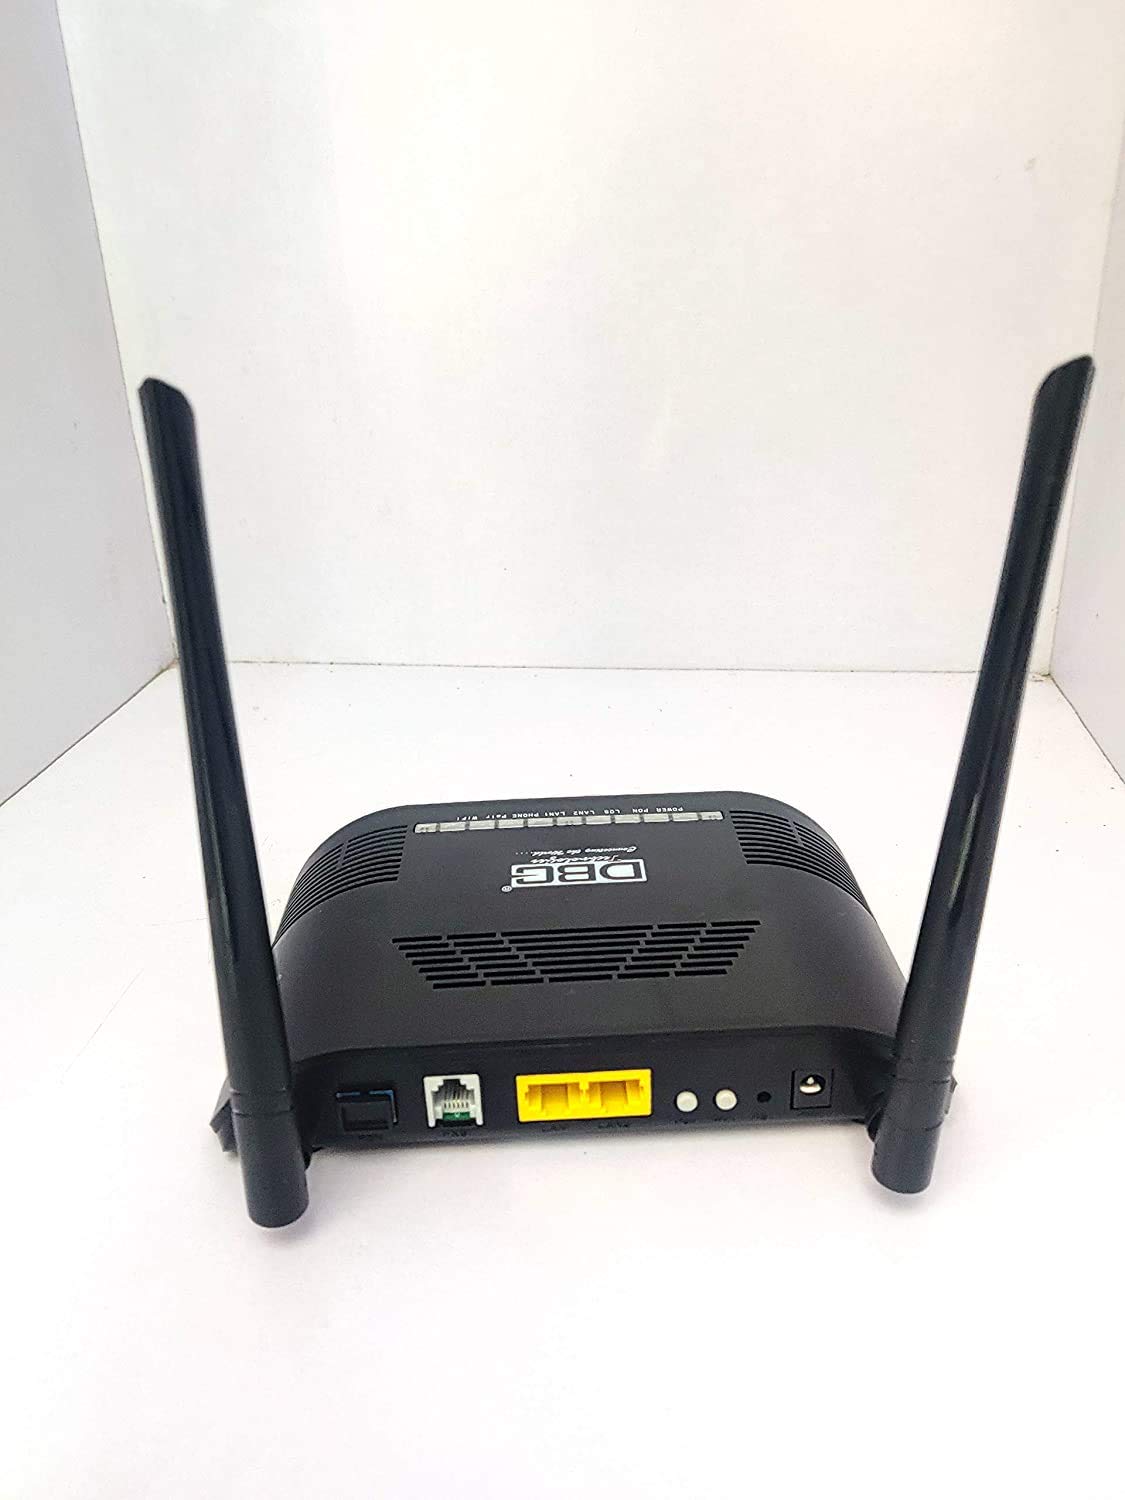 DBC Technologies FTTH GPON EPON ONU 1GE 1FE 1POTS WiFi Fiber ONT Modem Router (Black)